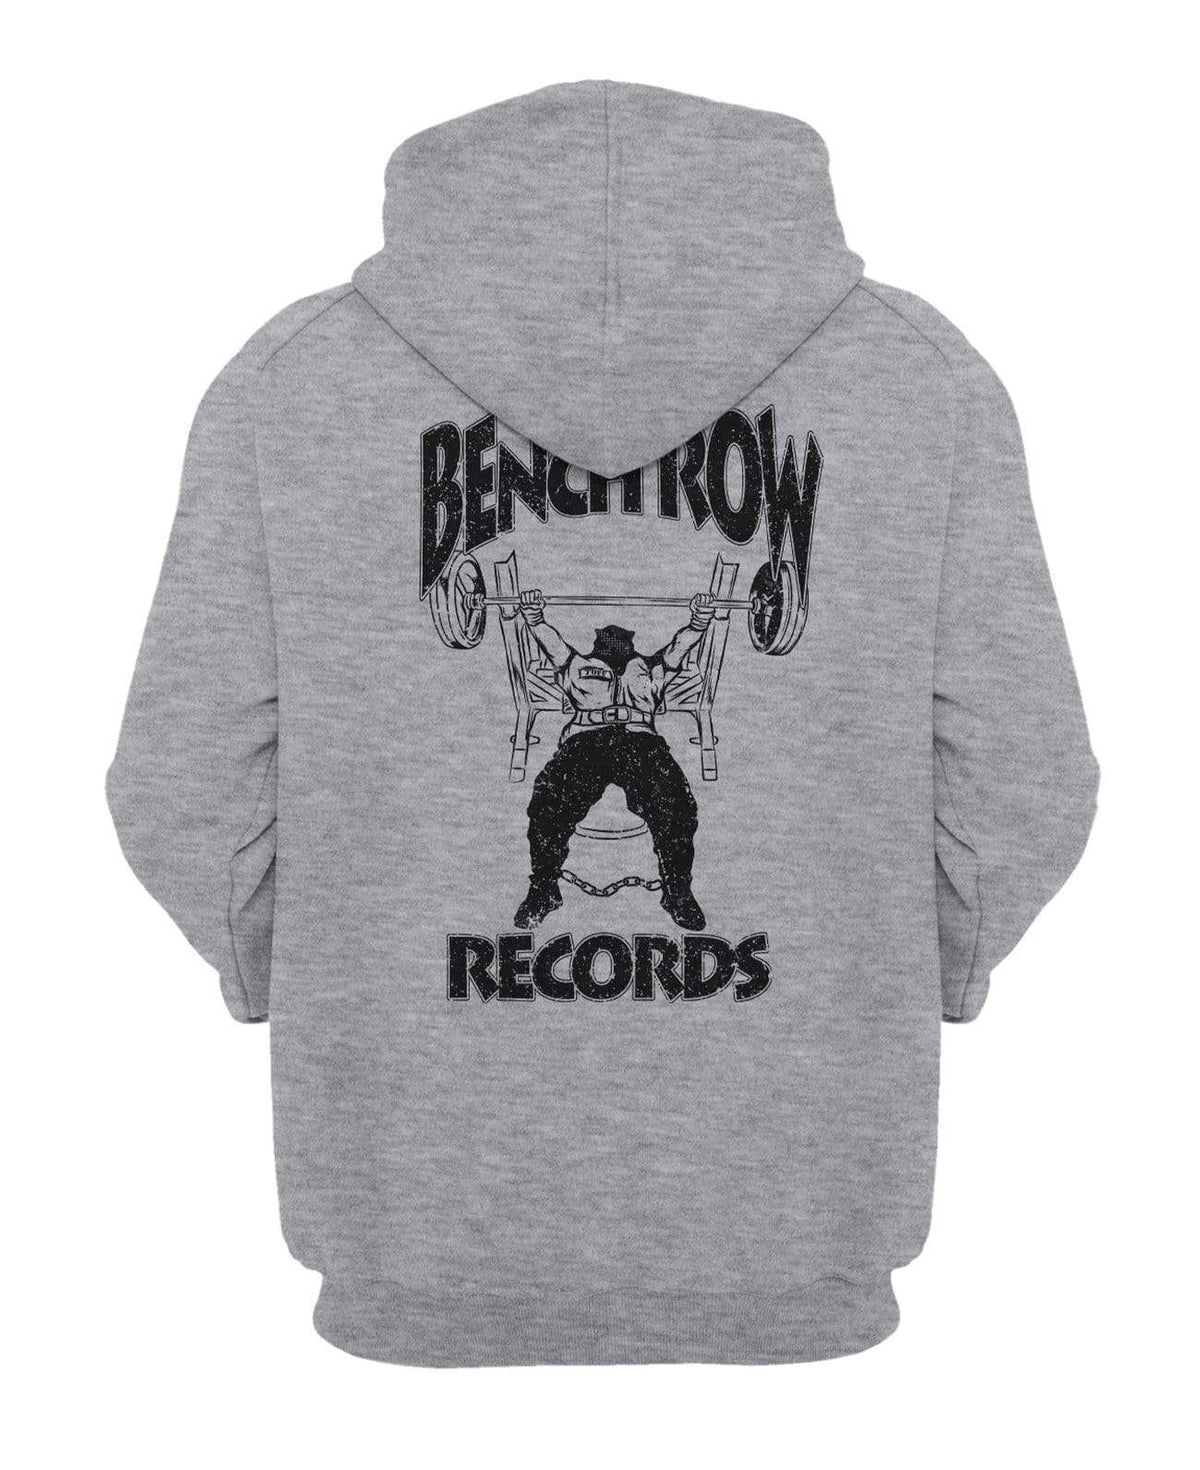 Bench Row Records Hooded Sweatshirt XS / Gray TuffWraps.com